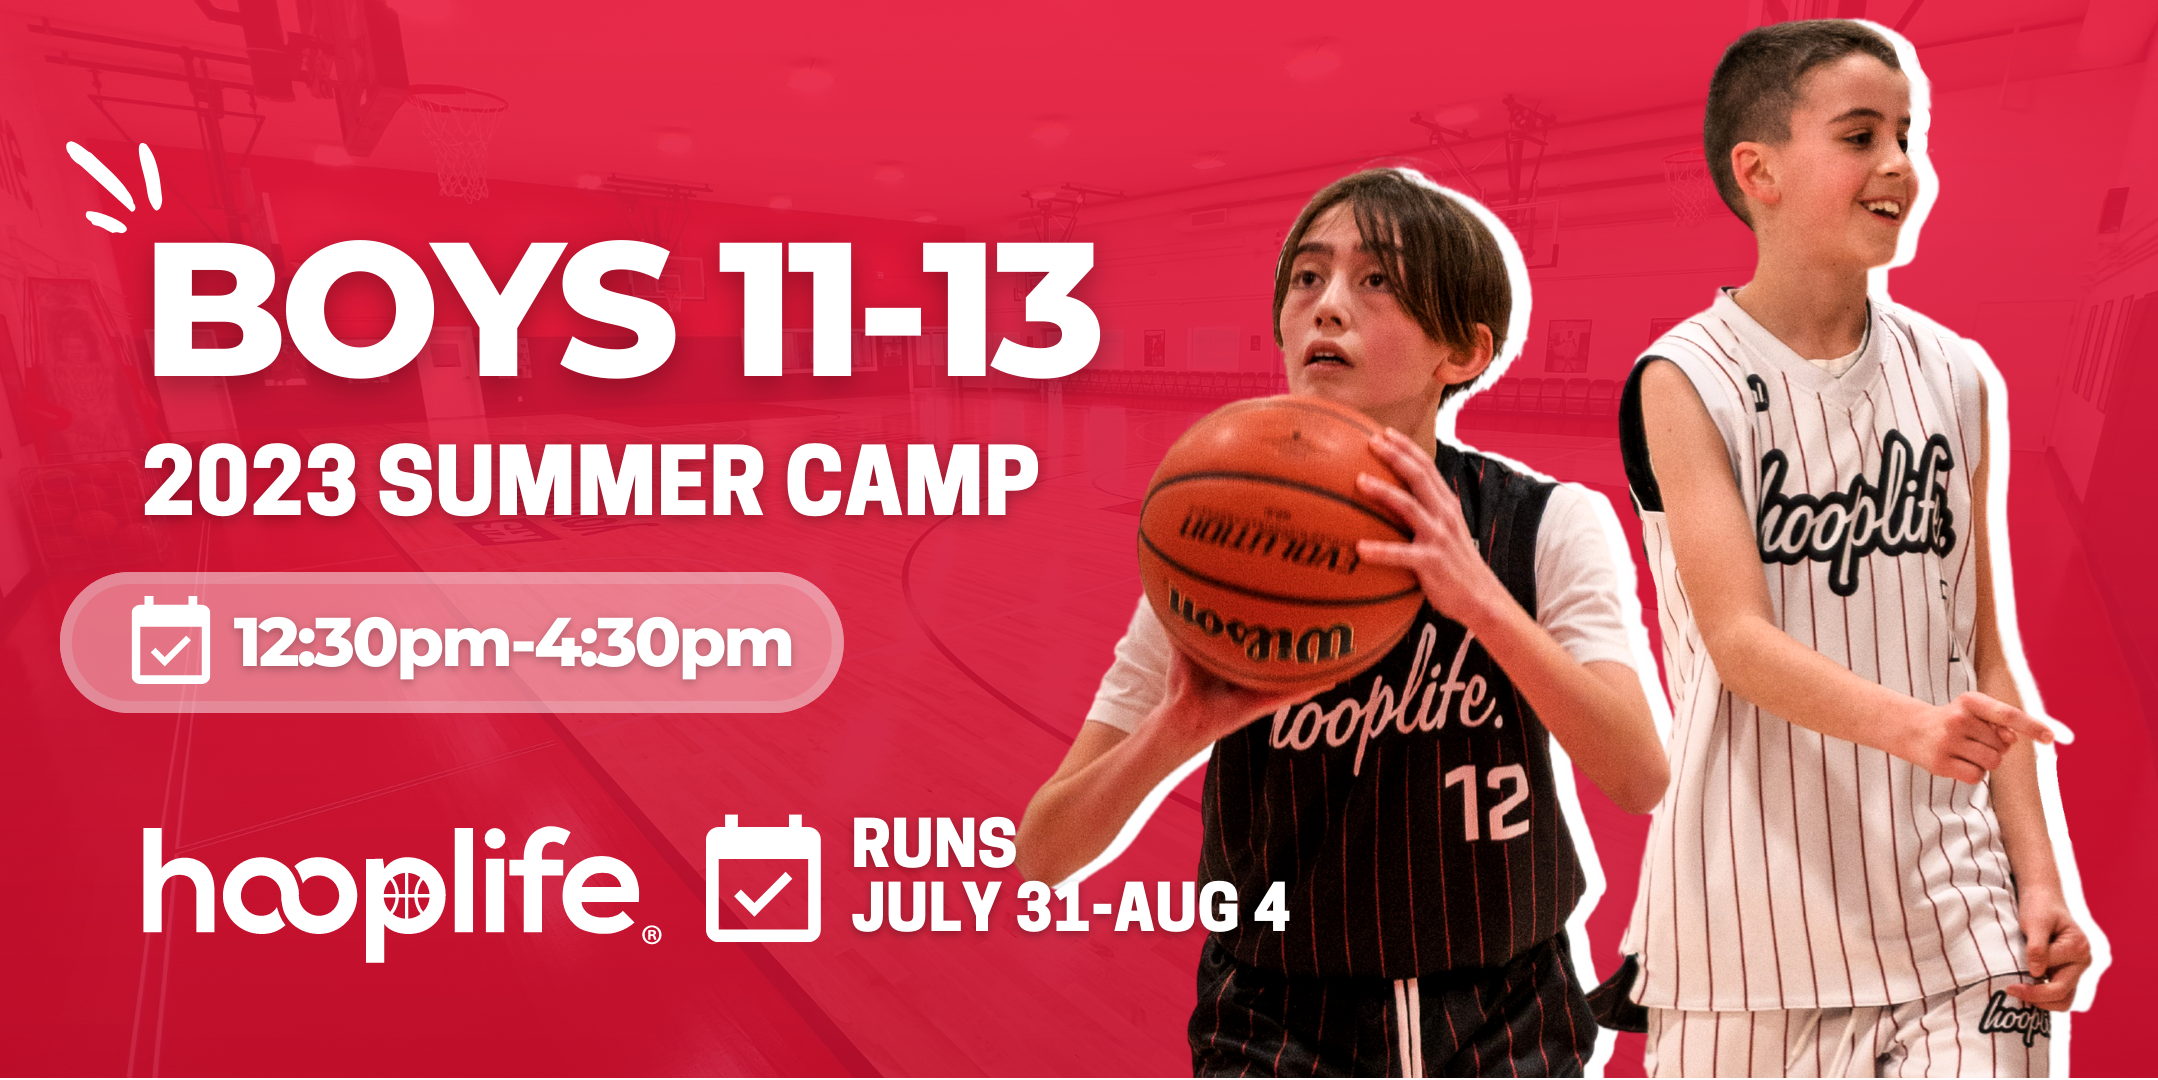 Boys 11-13 Summer Camp | July 31 - Aug 4